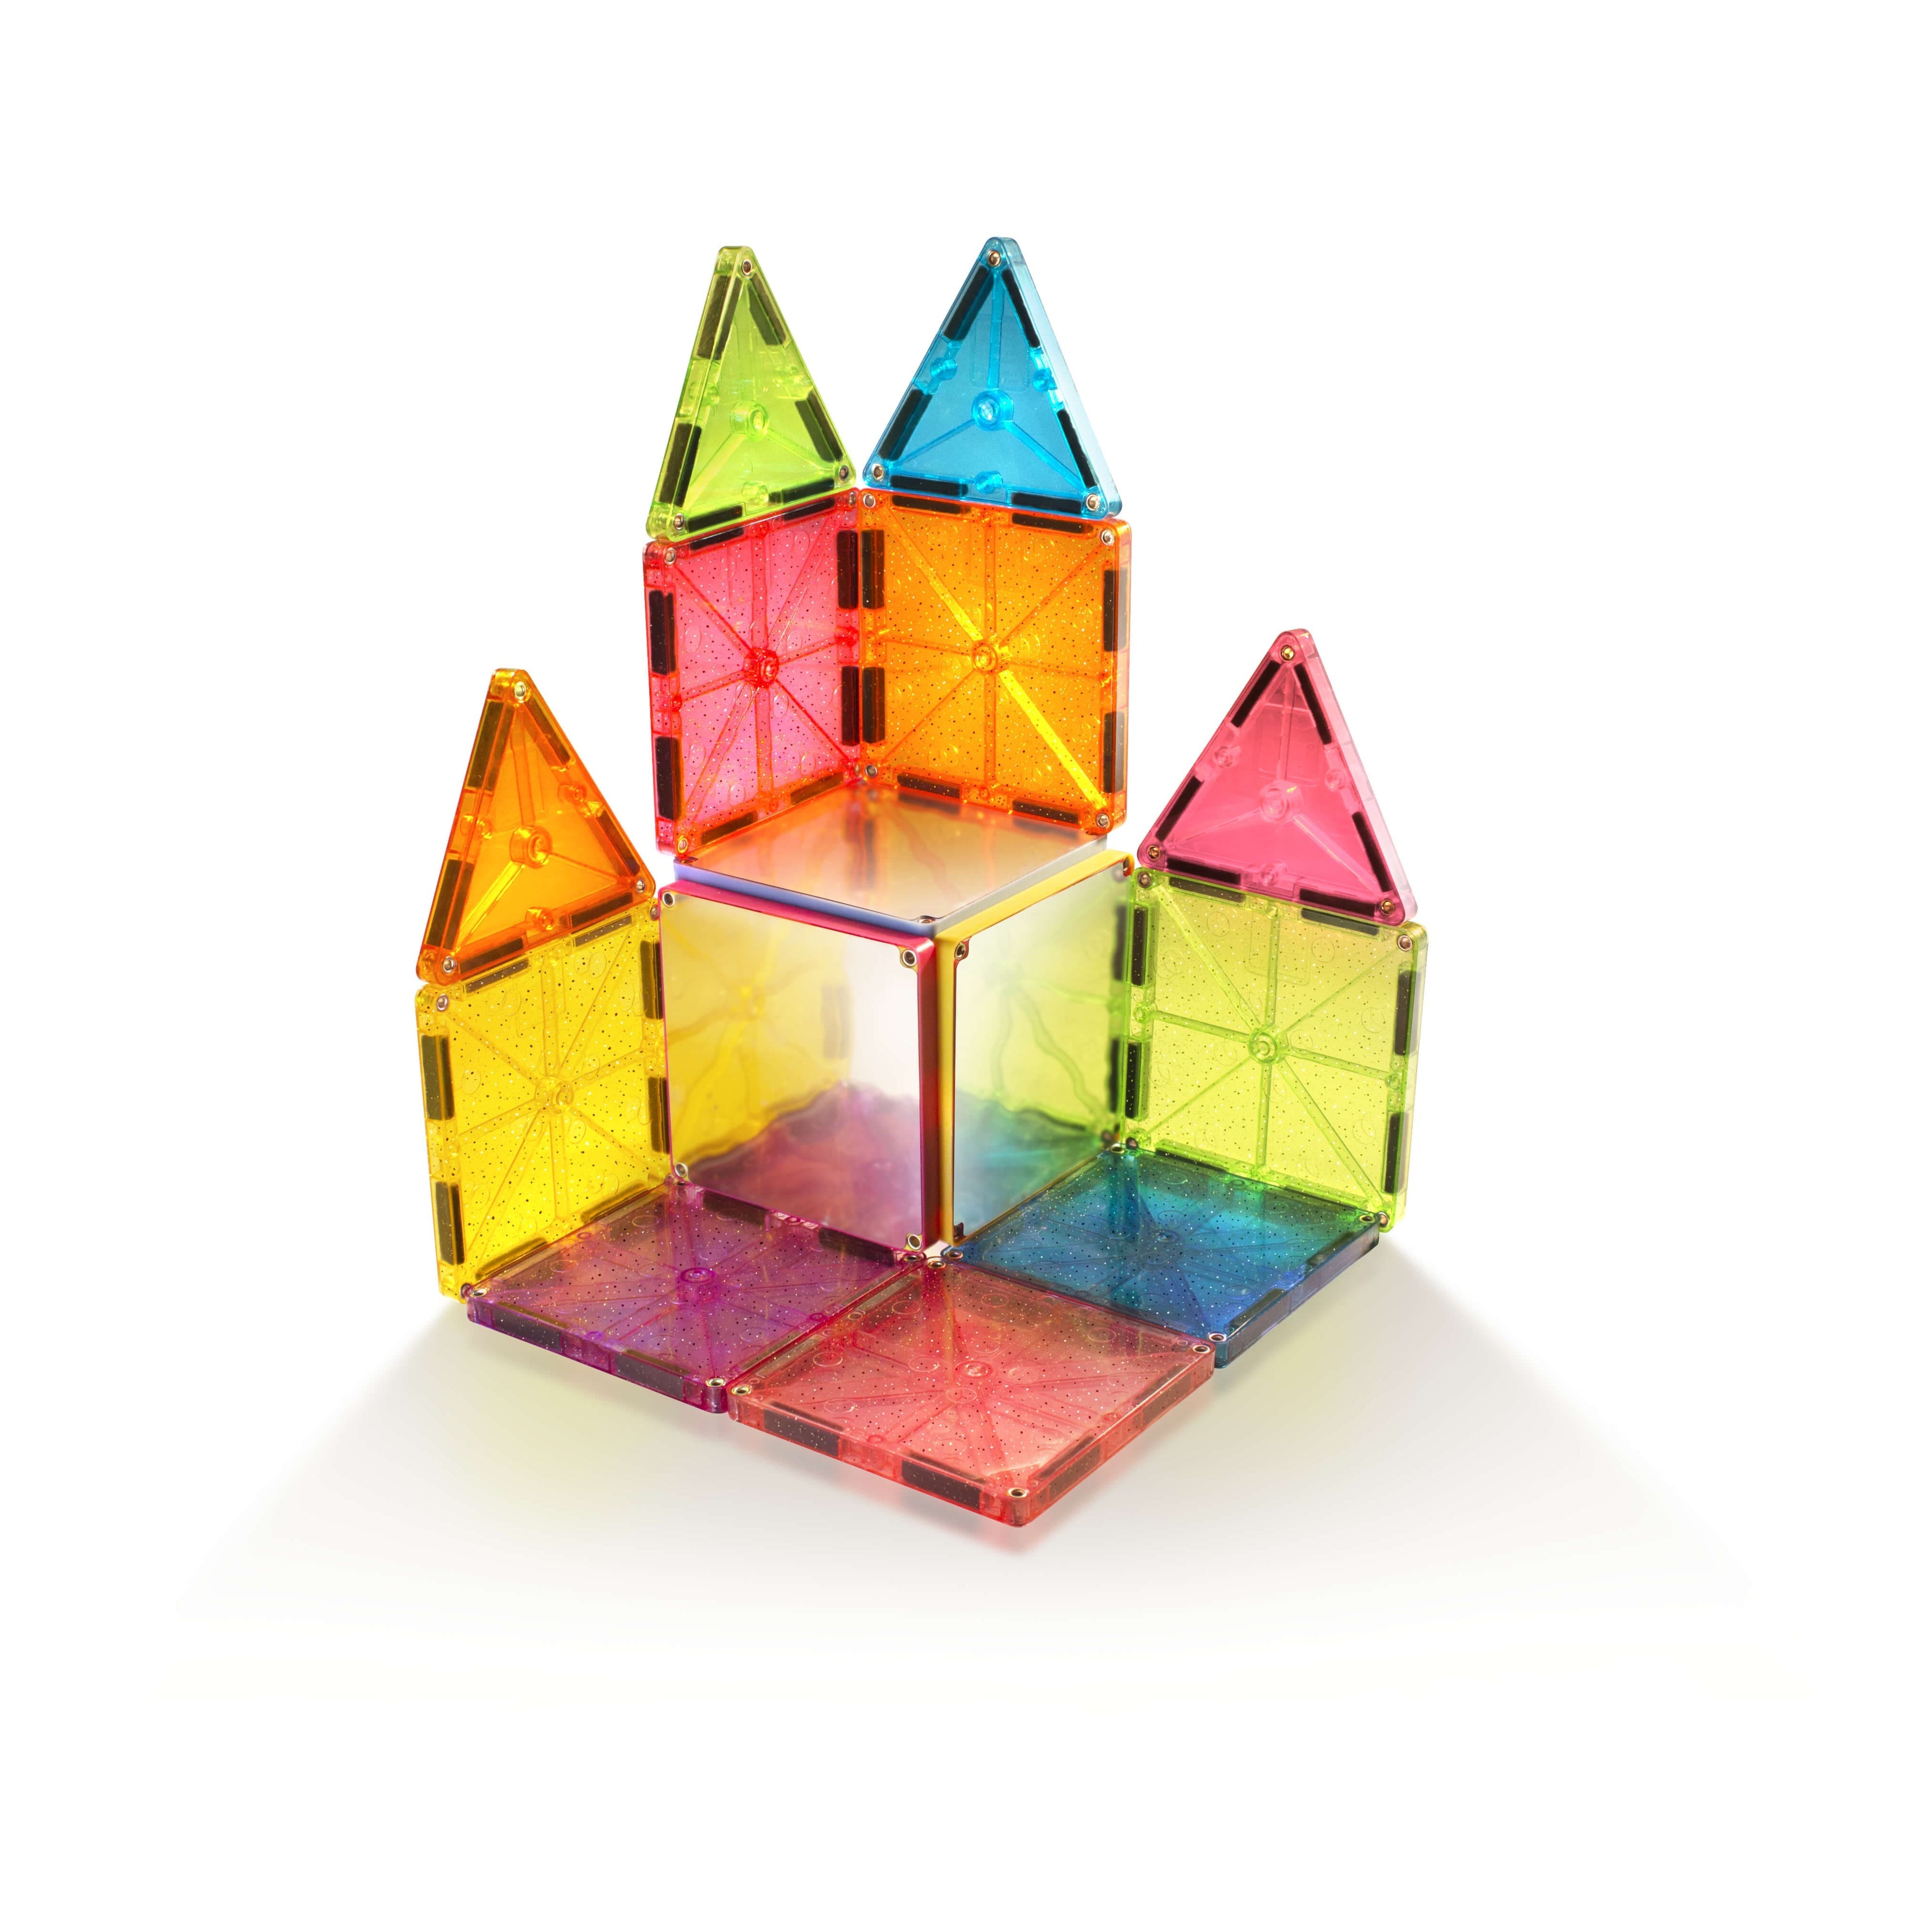 Magna-Tiles-Magna-Tiles Stardust 15 Piece Set - Mixed Colors-18915-Legacy Toys